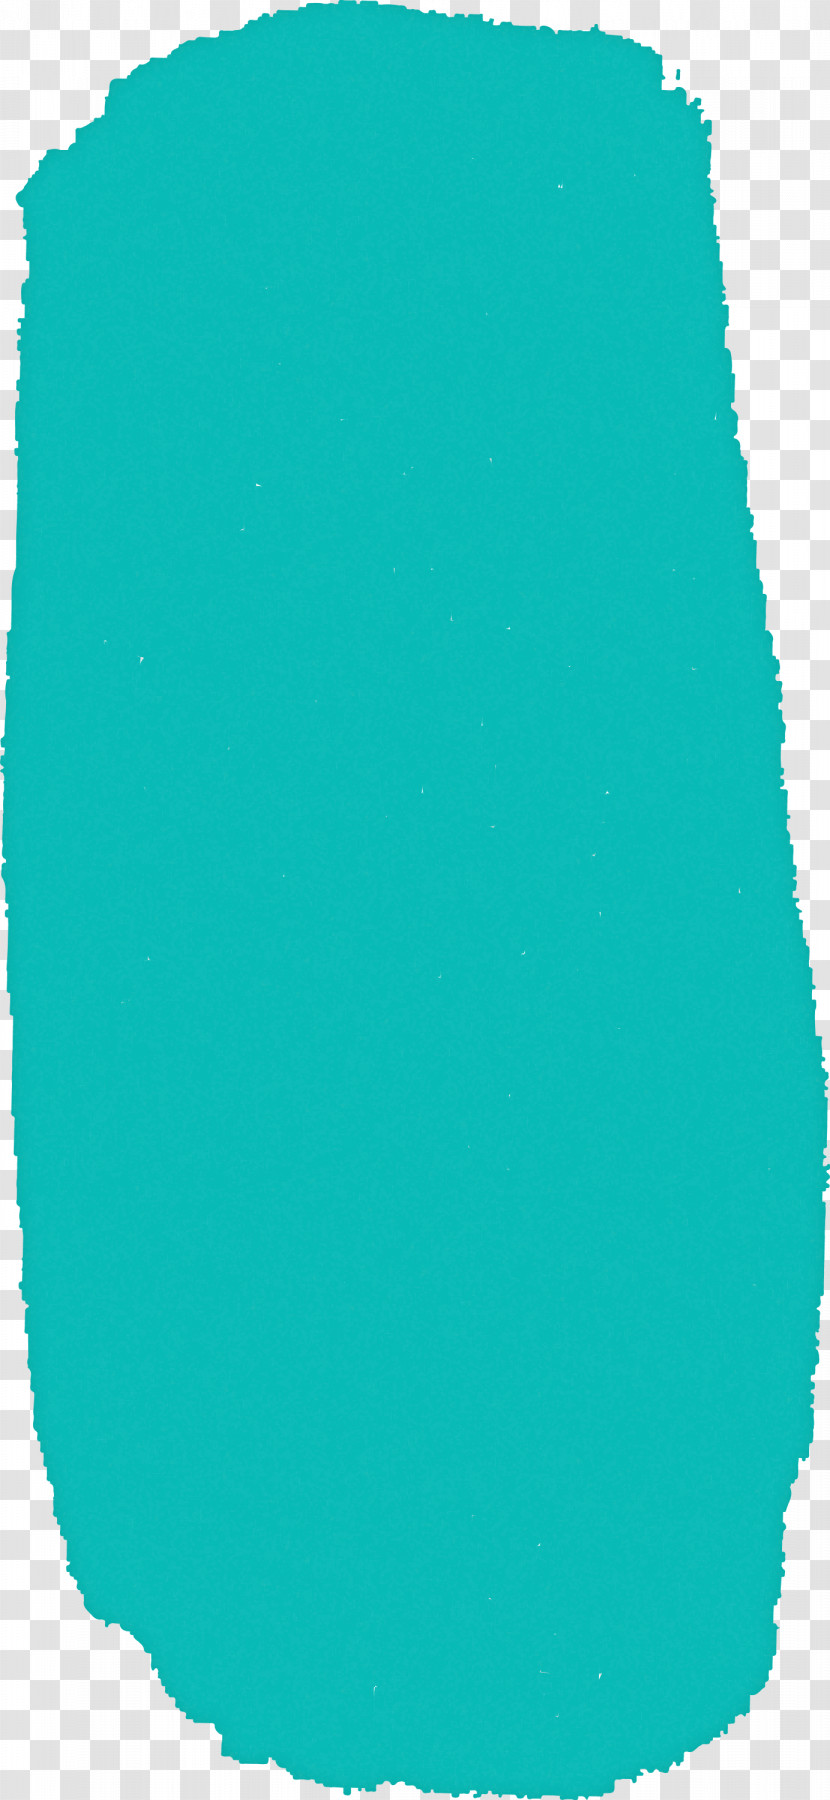 Green Aqua Turquoise Blue Teal Transparent PNG